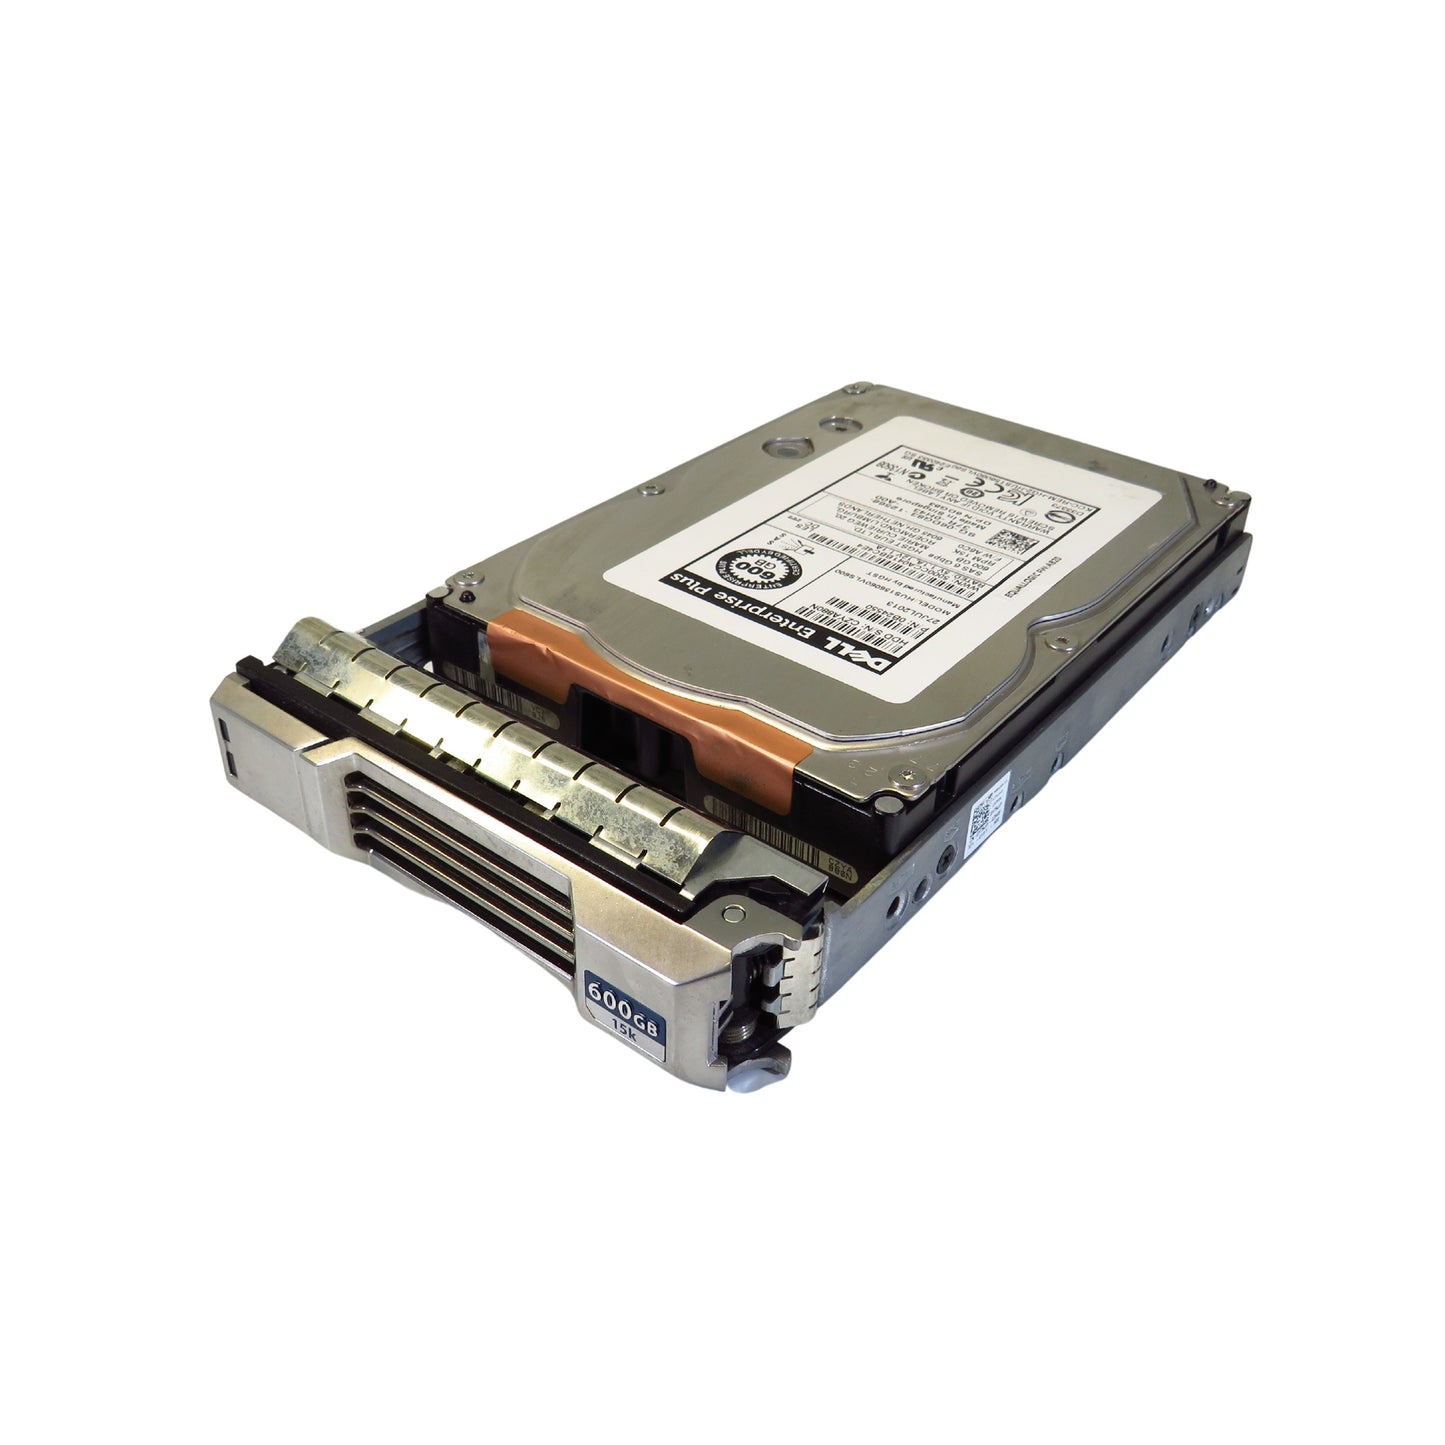 EqualLogic 6DG83 600GB 15K RPM 3.5" SAS 6Gbps LFF HDD Hard Drive (Refurbished)